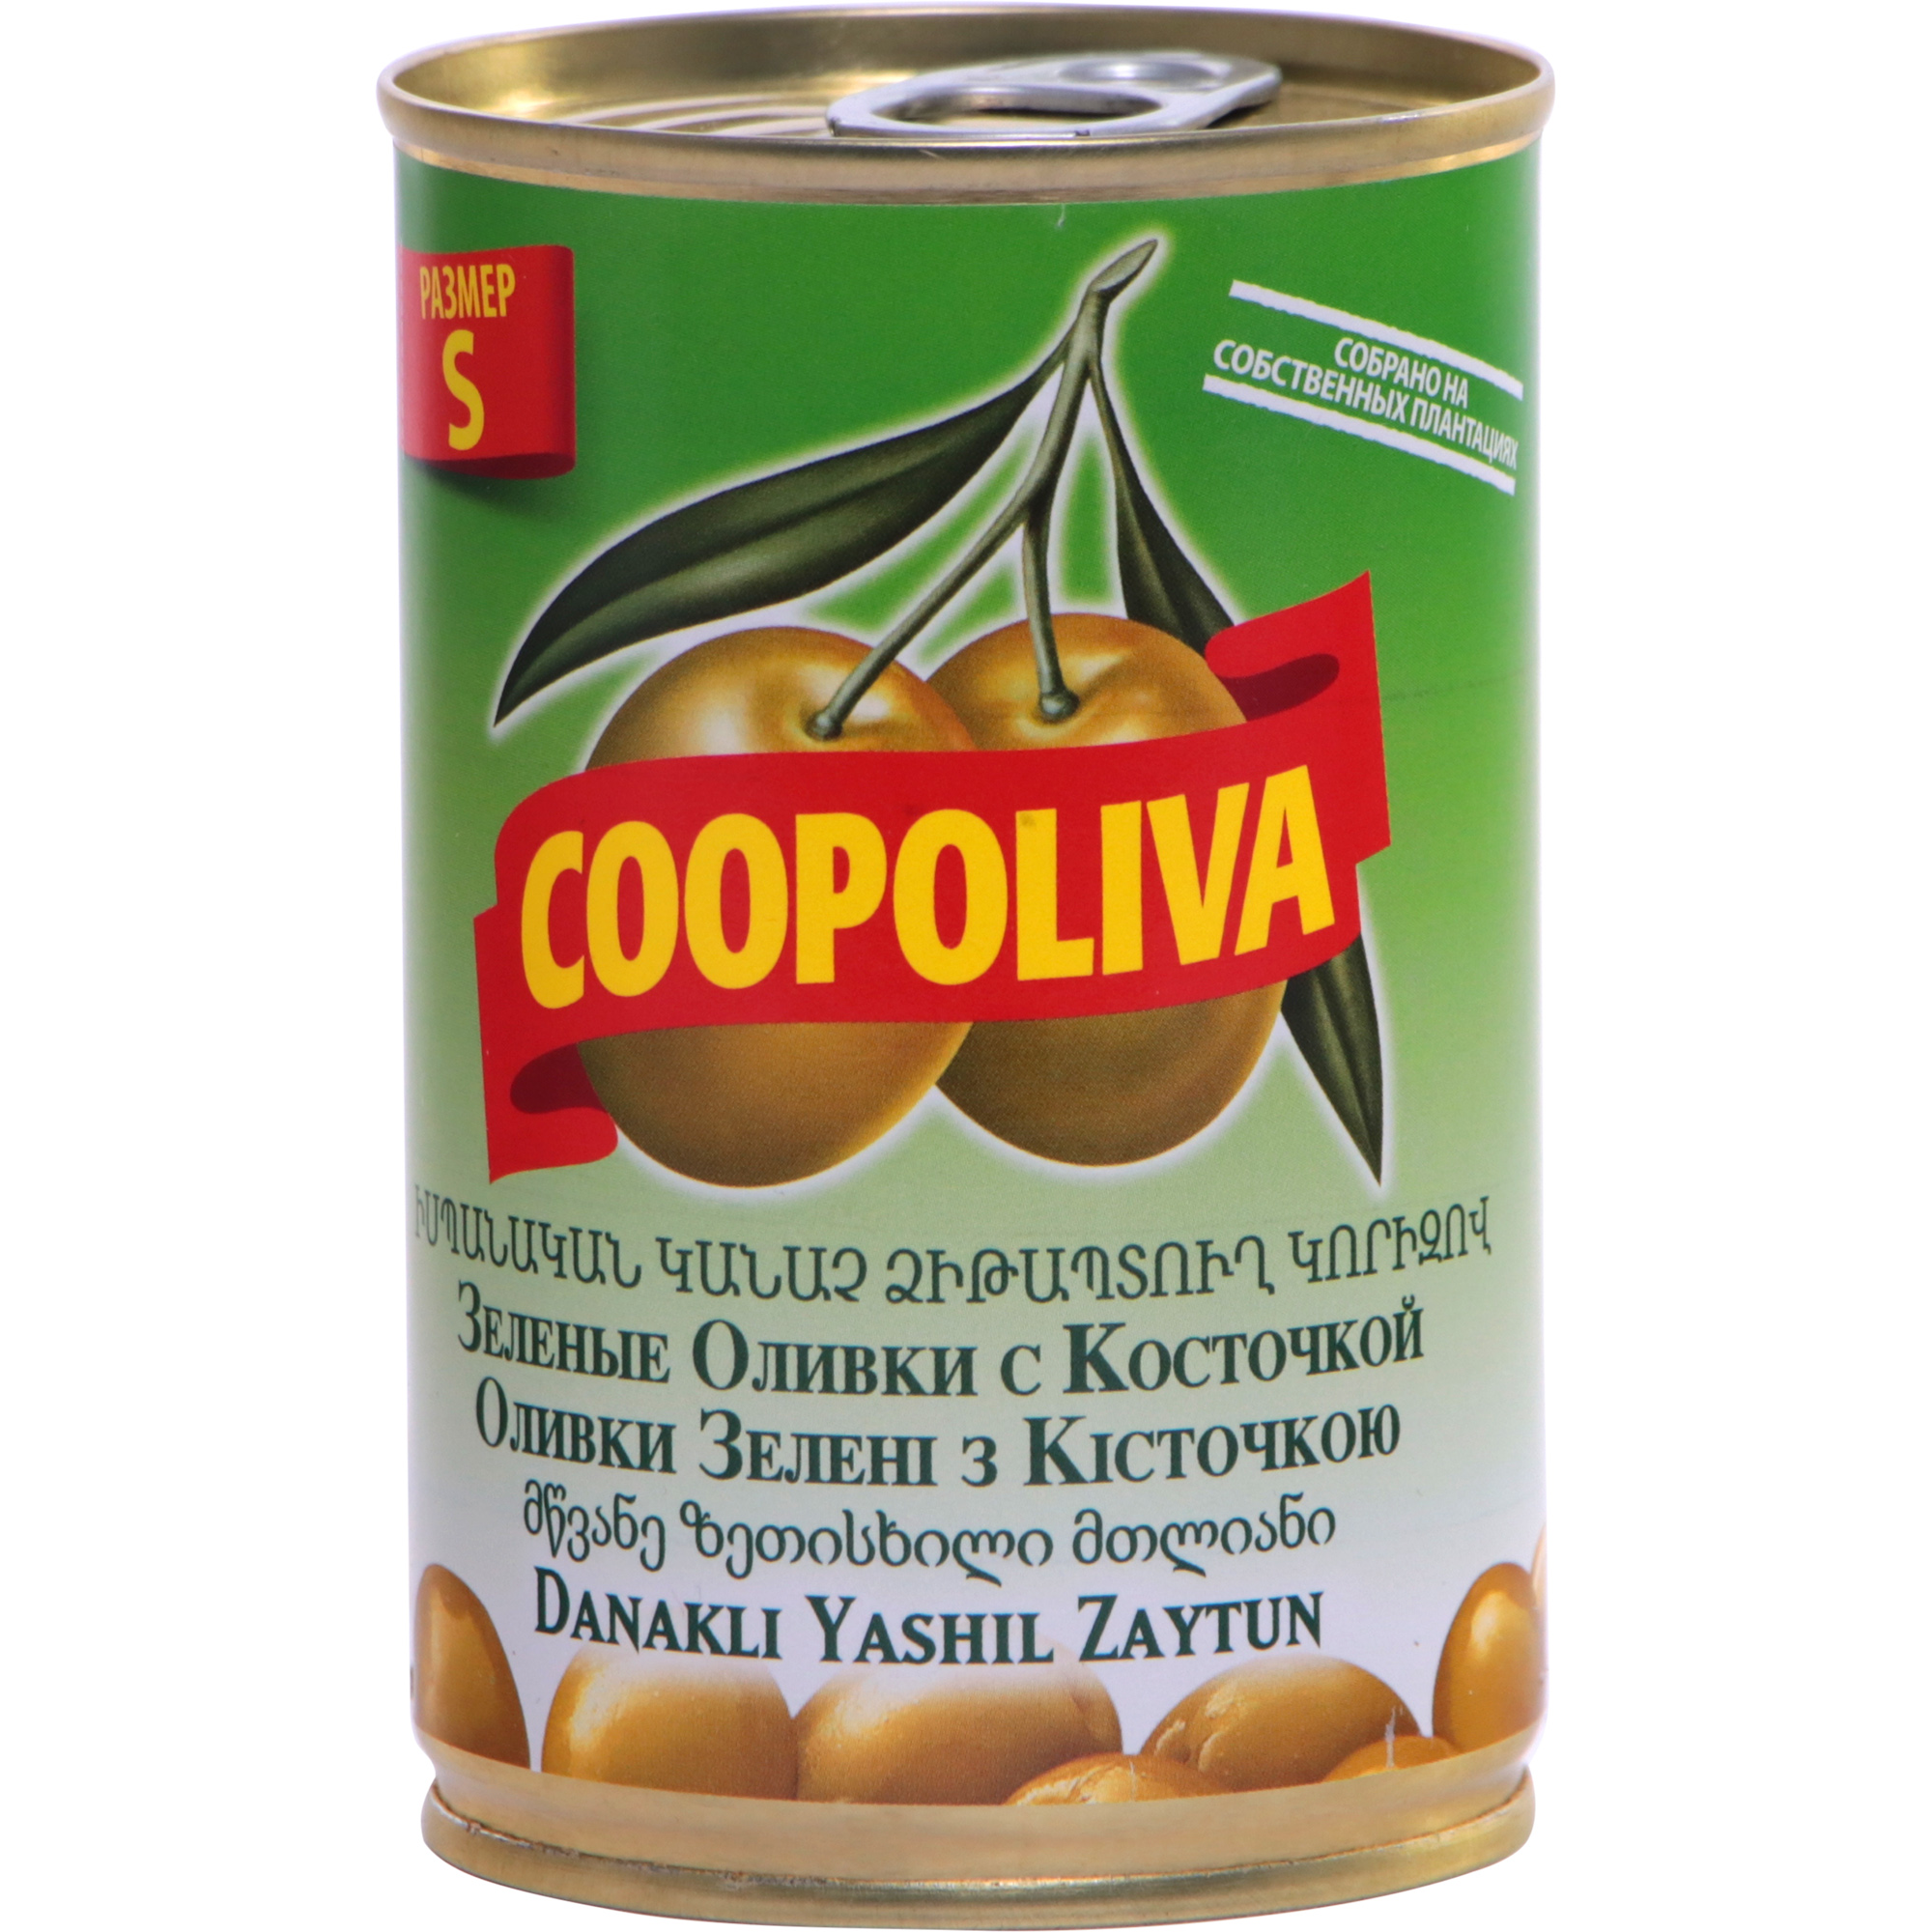 Оливки COOPOLIVA S с косточкой, 300 г маслины coopoliva королевские с косточкой 405 г